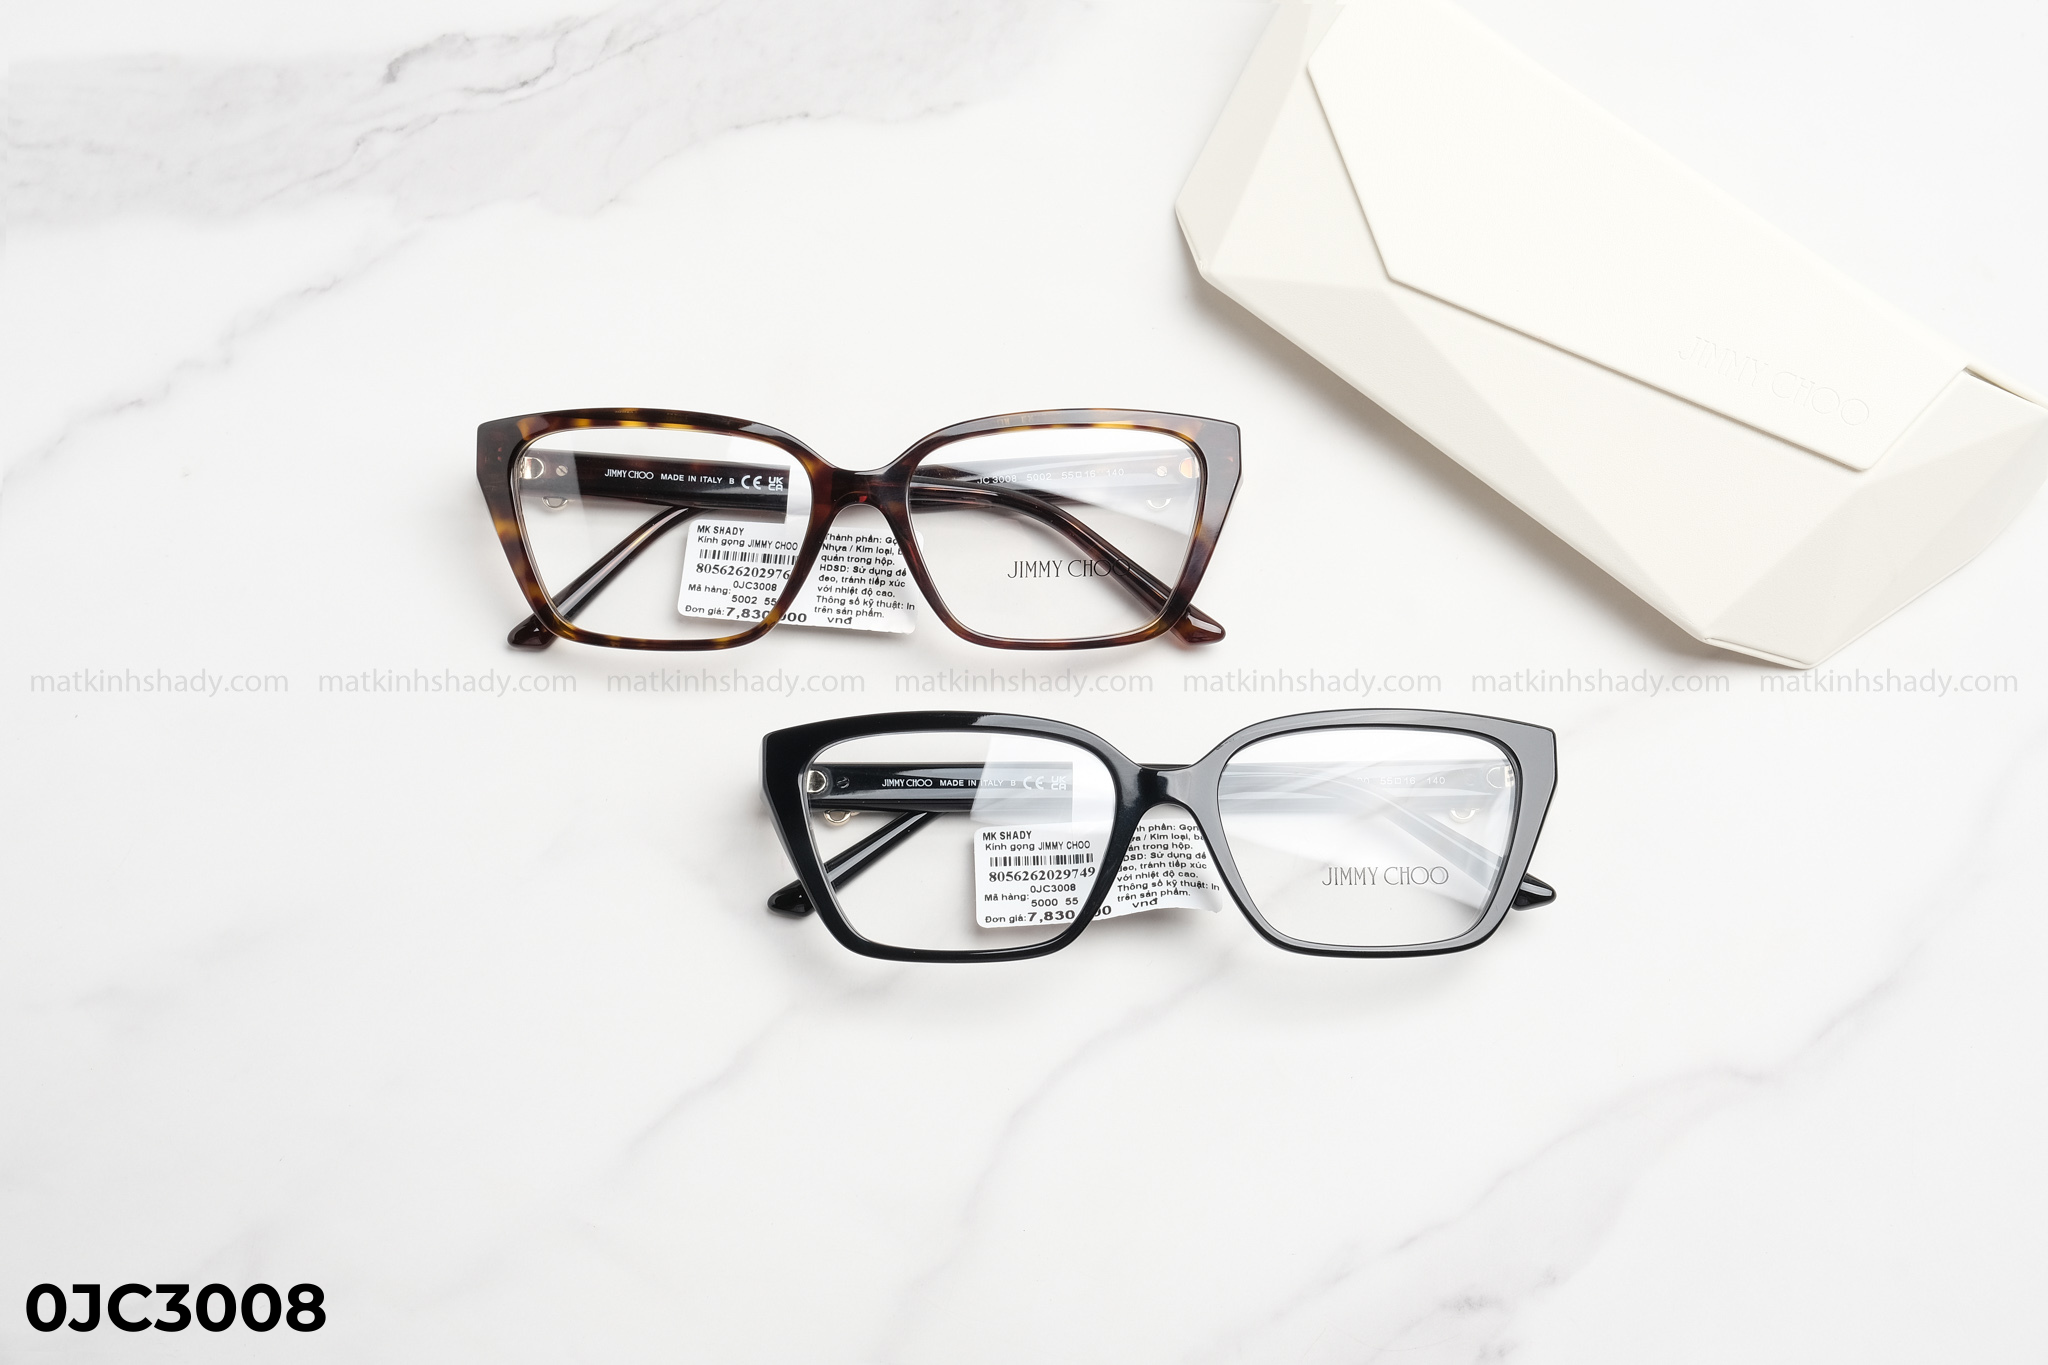  Jimmy Choo Eyewear - Glasses - 0JC3008 